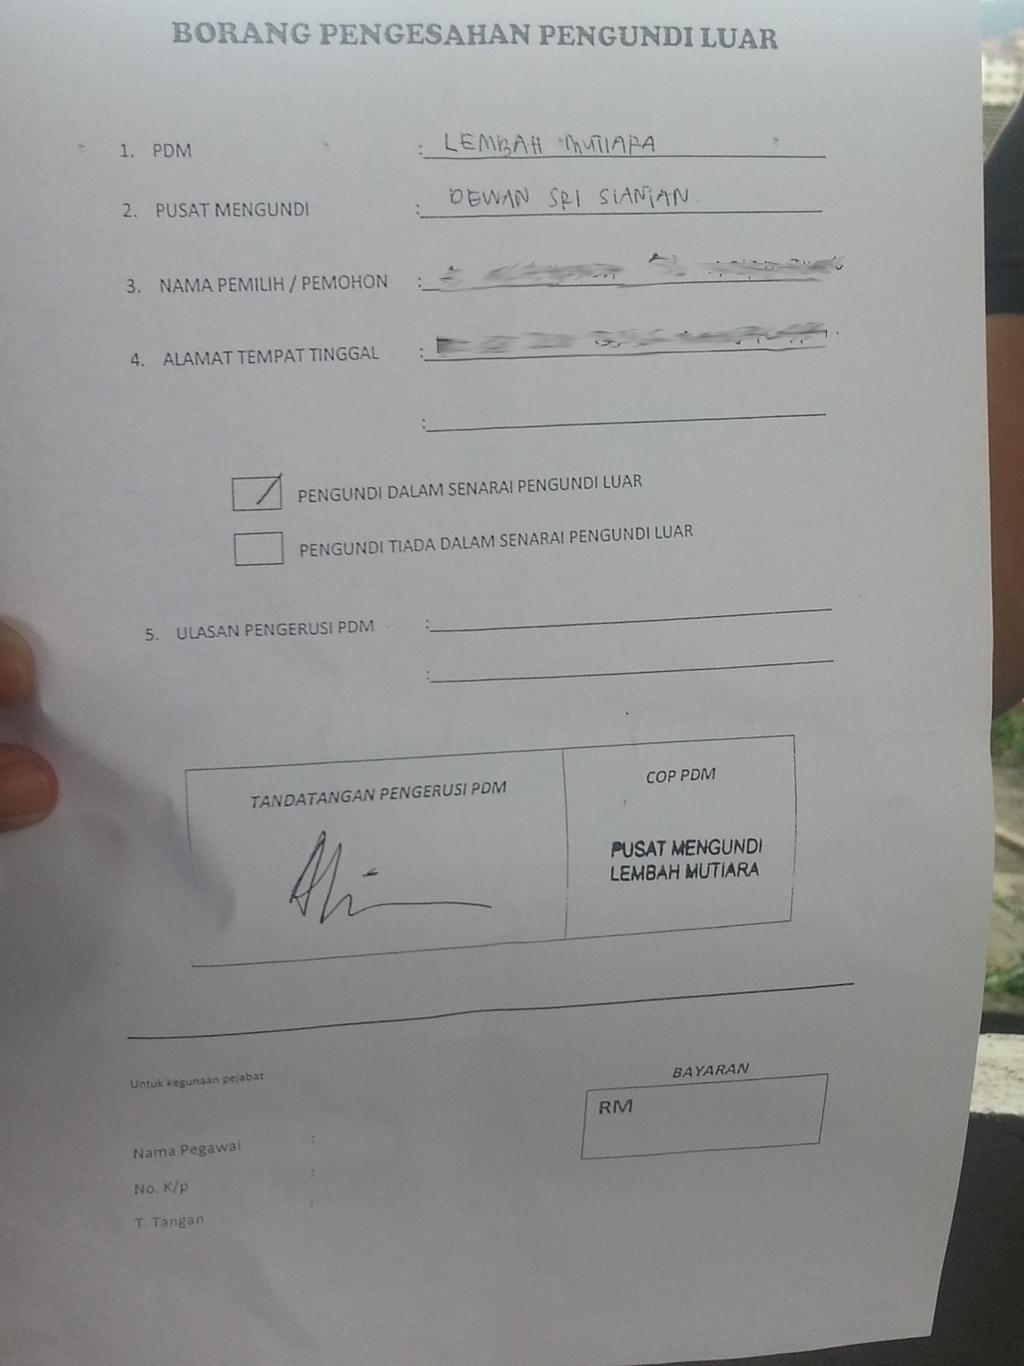 Bribery P097 Selayang: BN booth allegedly giving out Borang Pengesahan